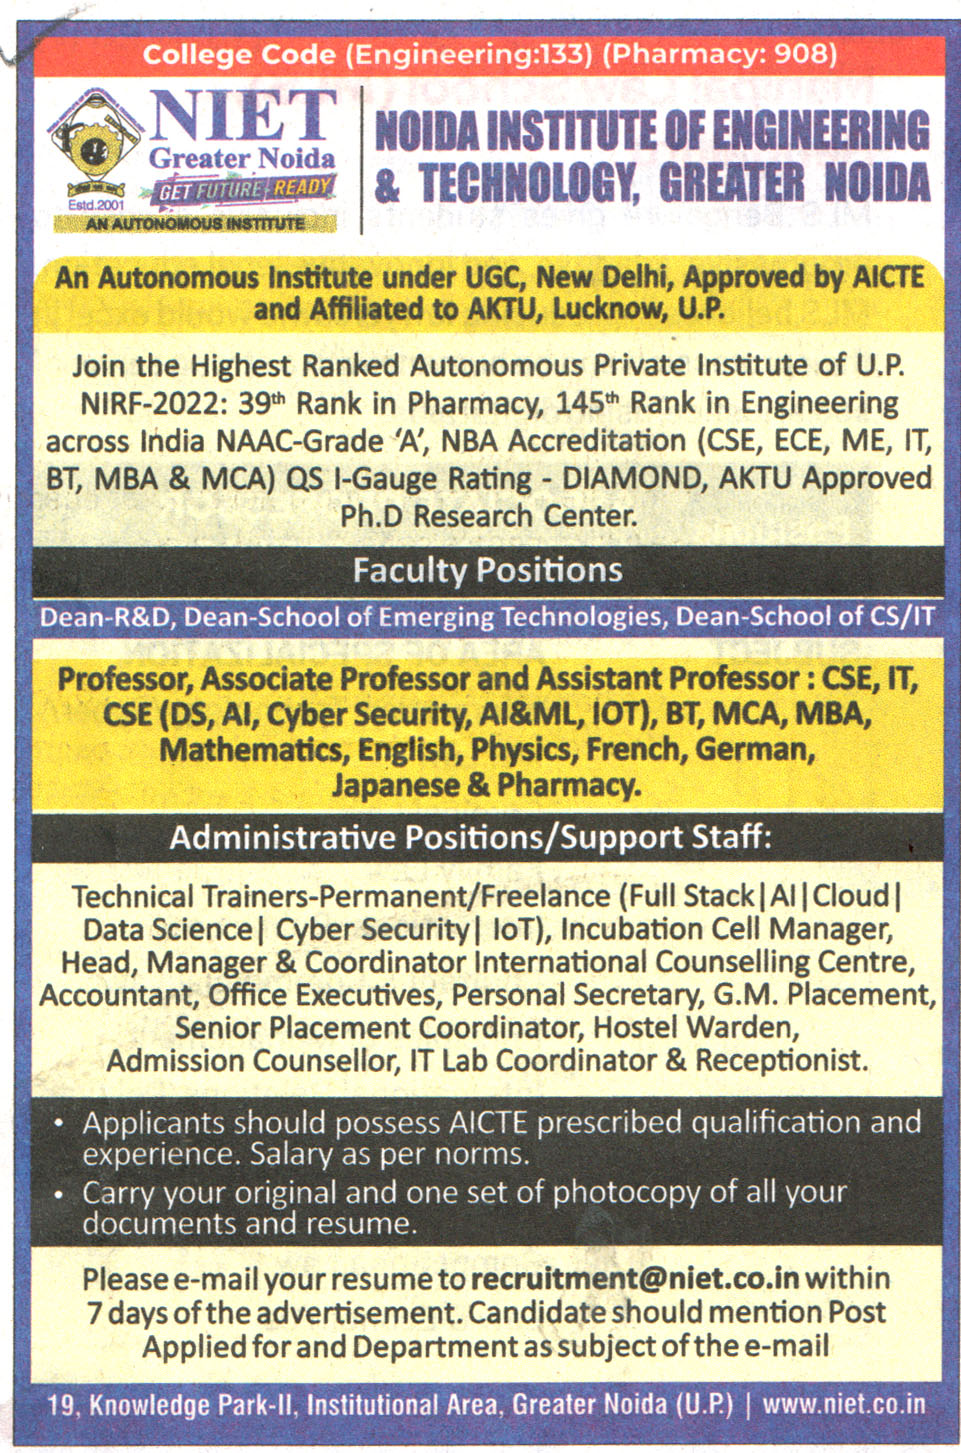 Noida Institute of Engineering & Technology (NIET) Greater Noida Recruitment